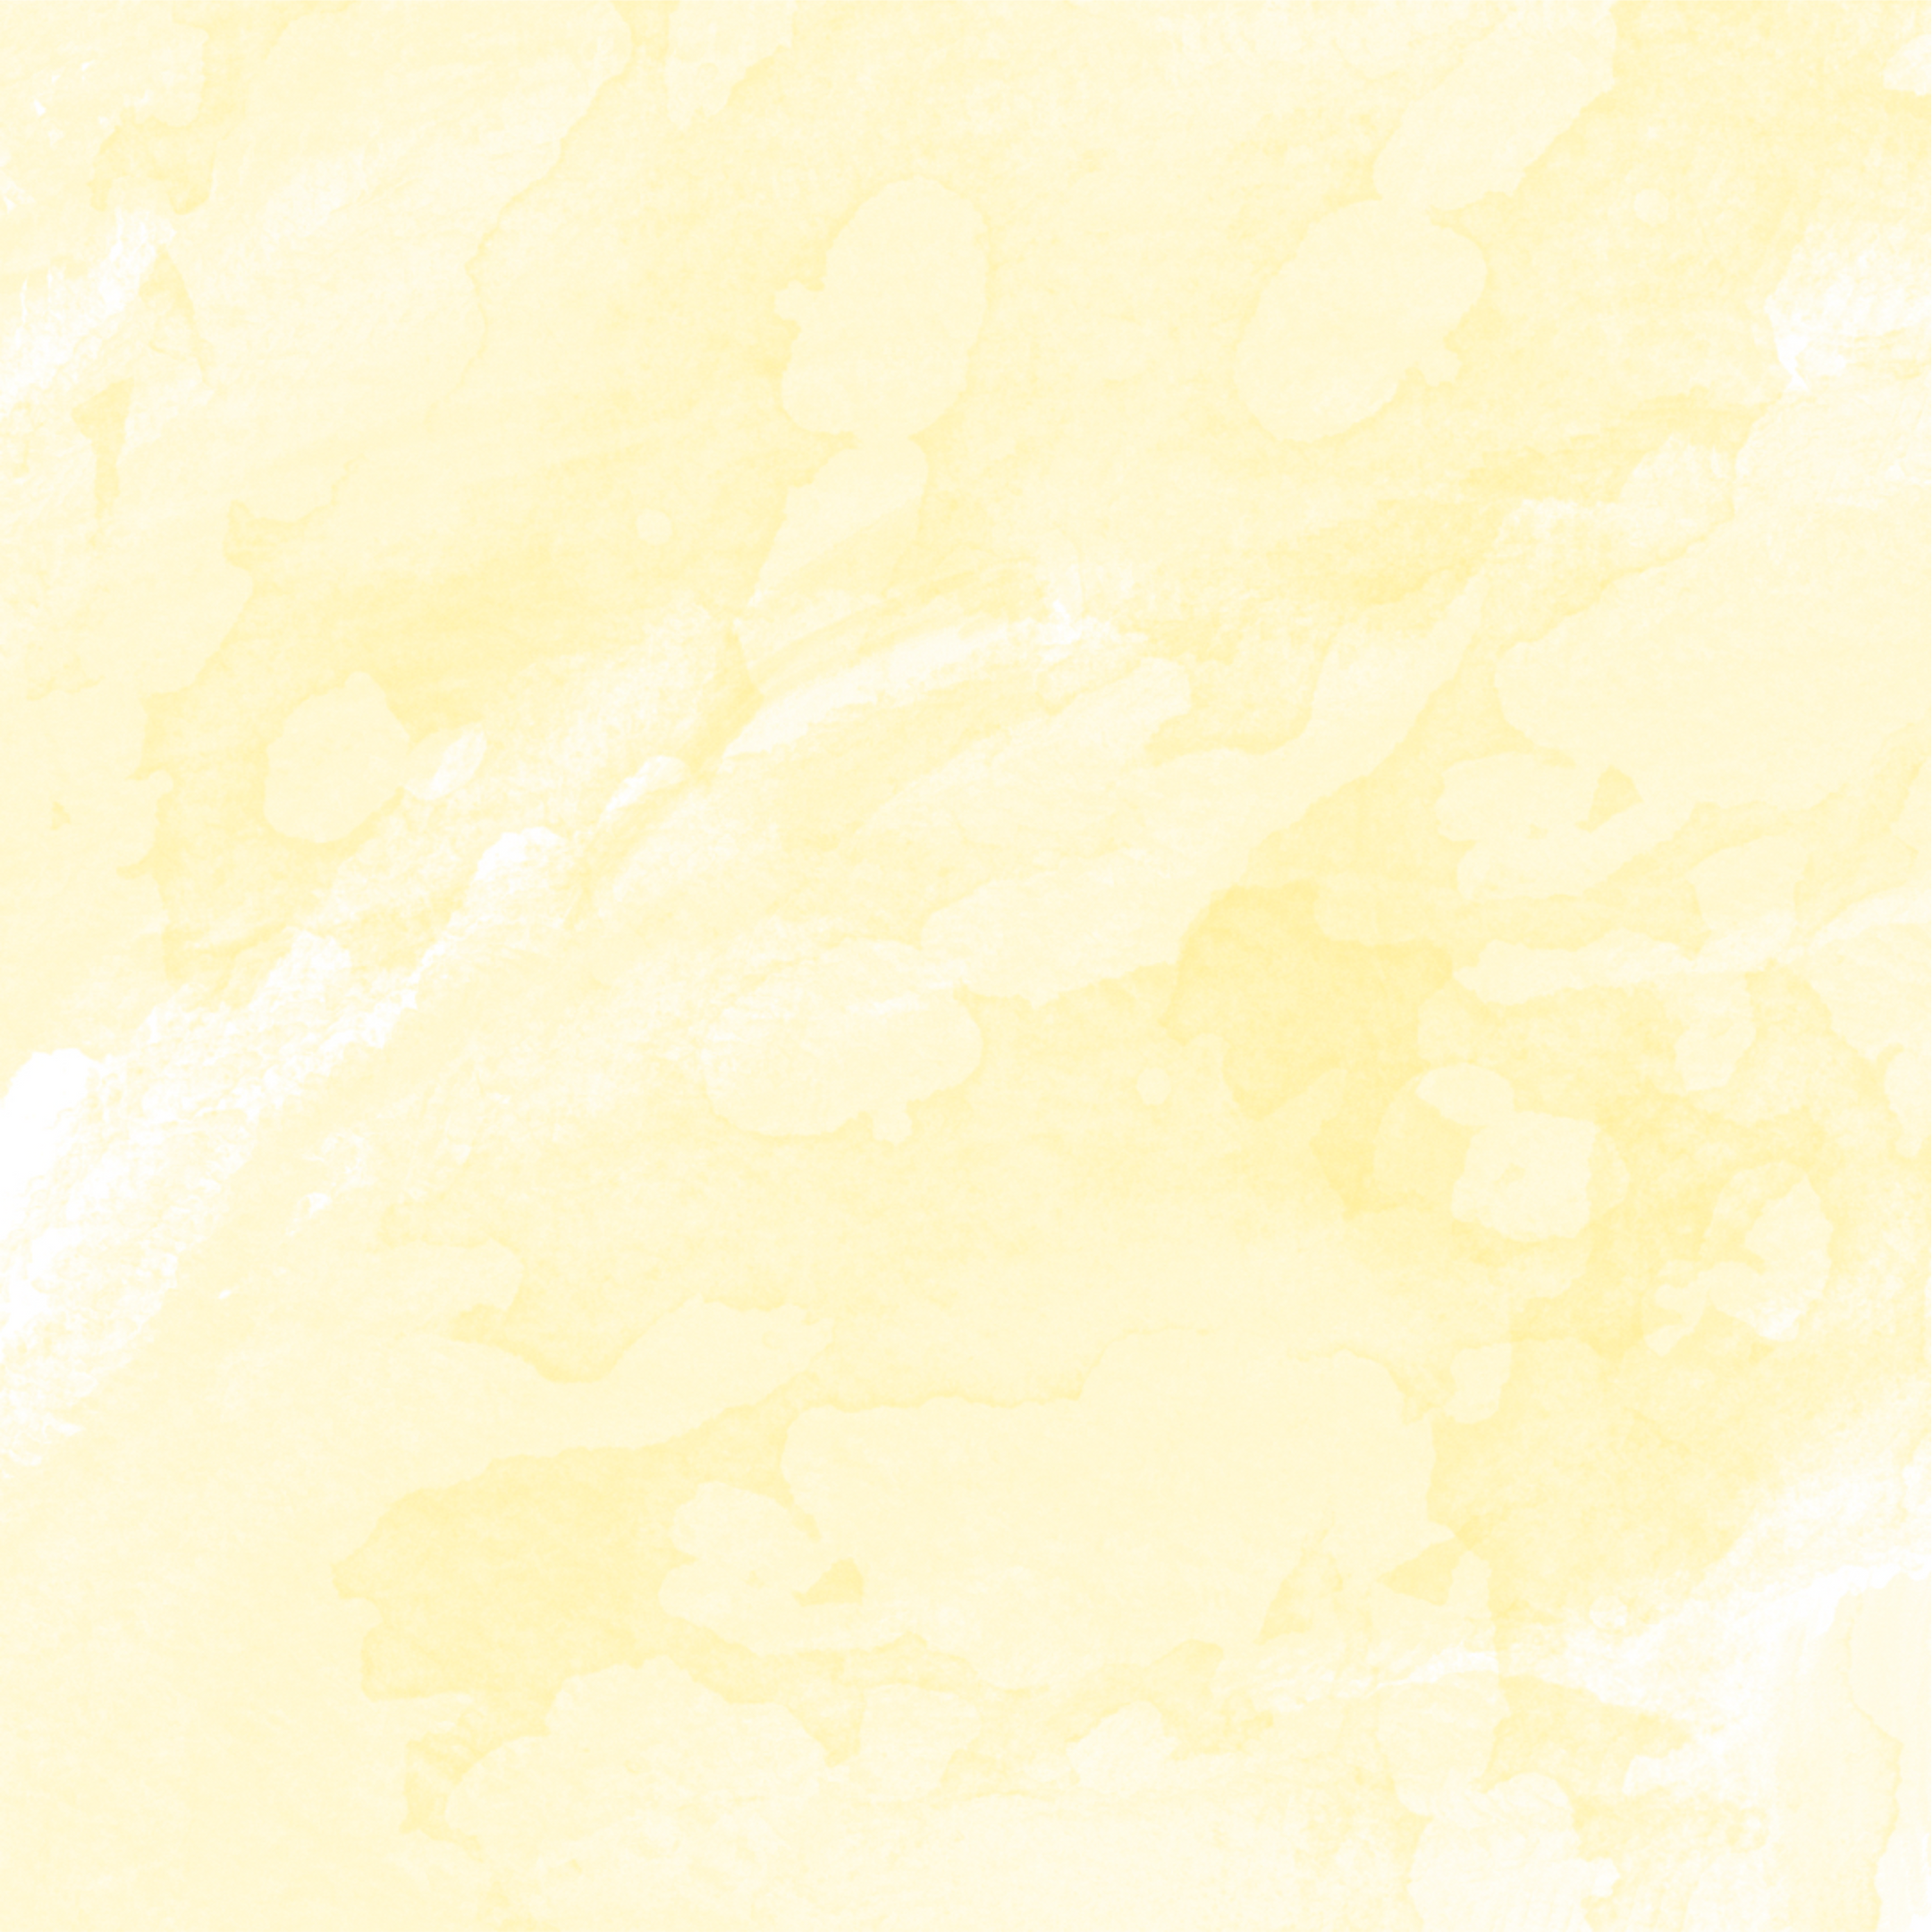 Background texture yellow